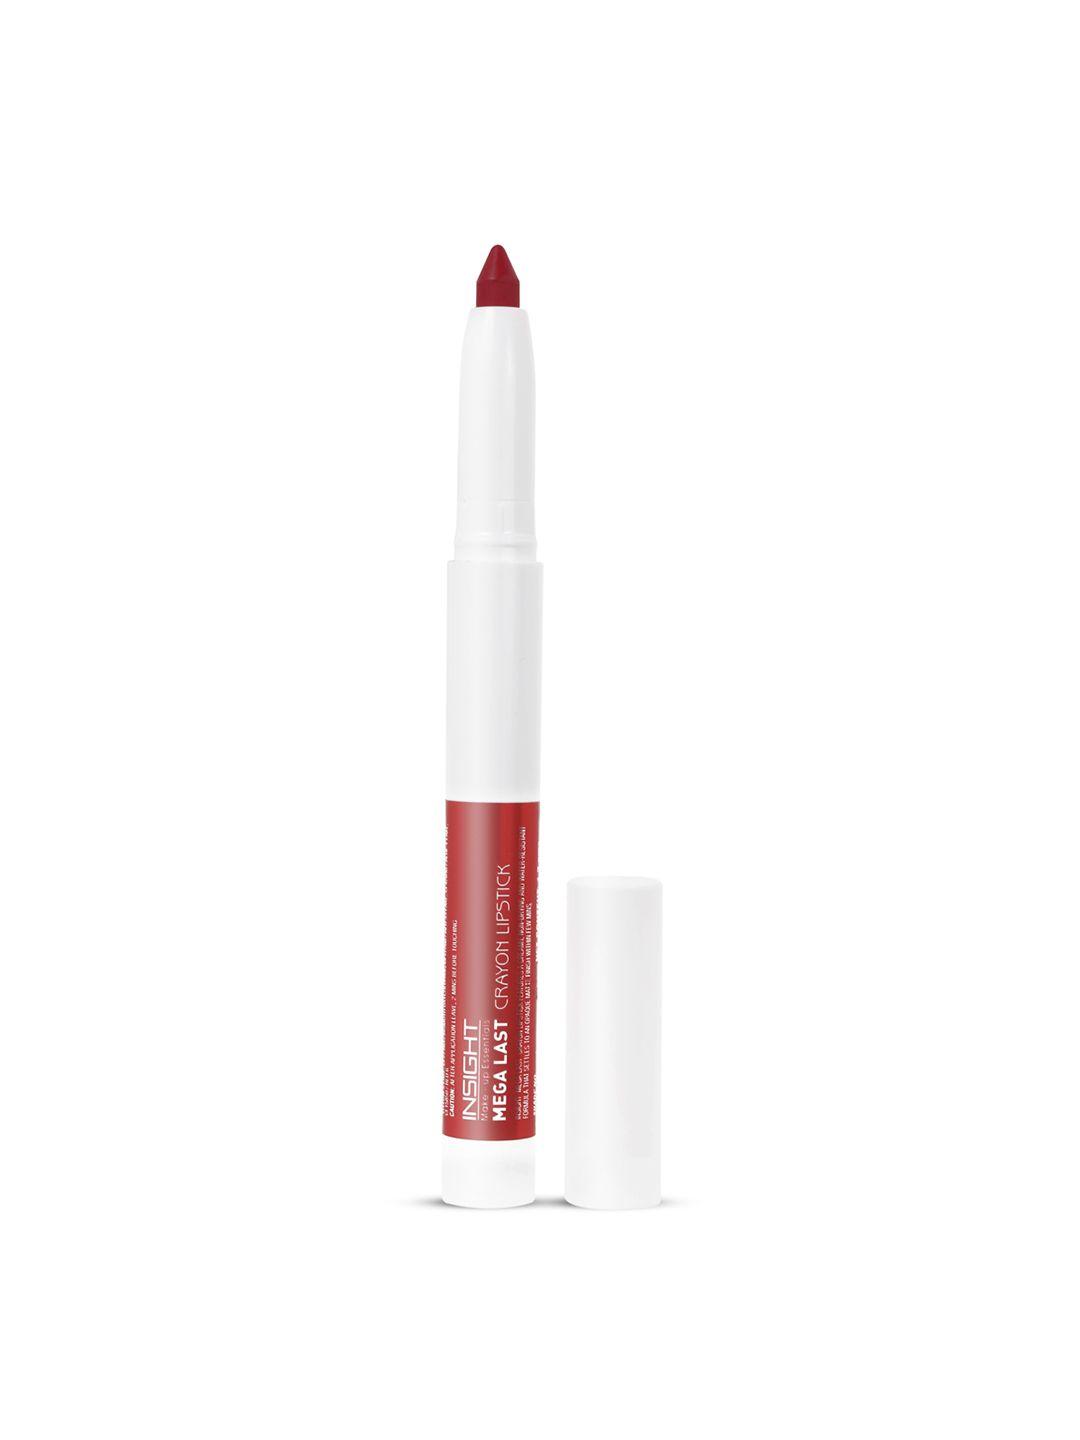 insight cosmetics mega last matte crayon lipstick with vitamin e 1.3 g -take it slow